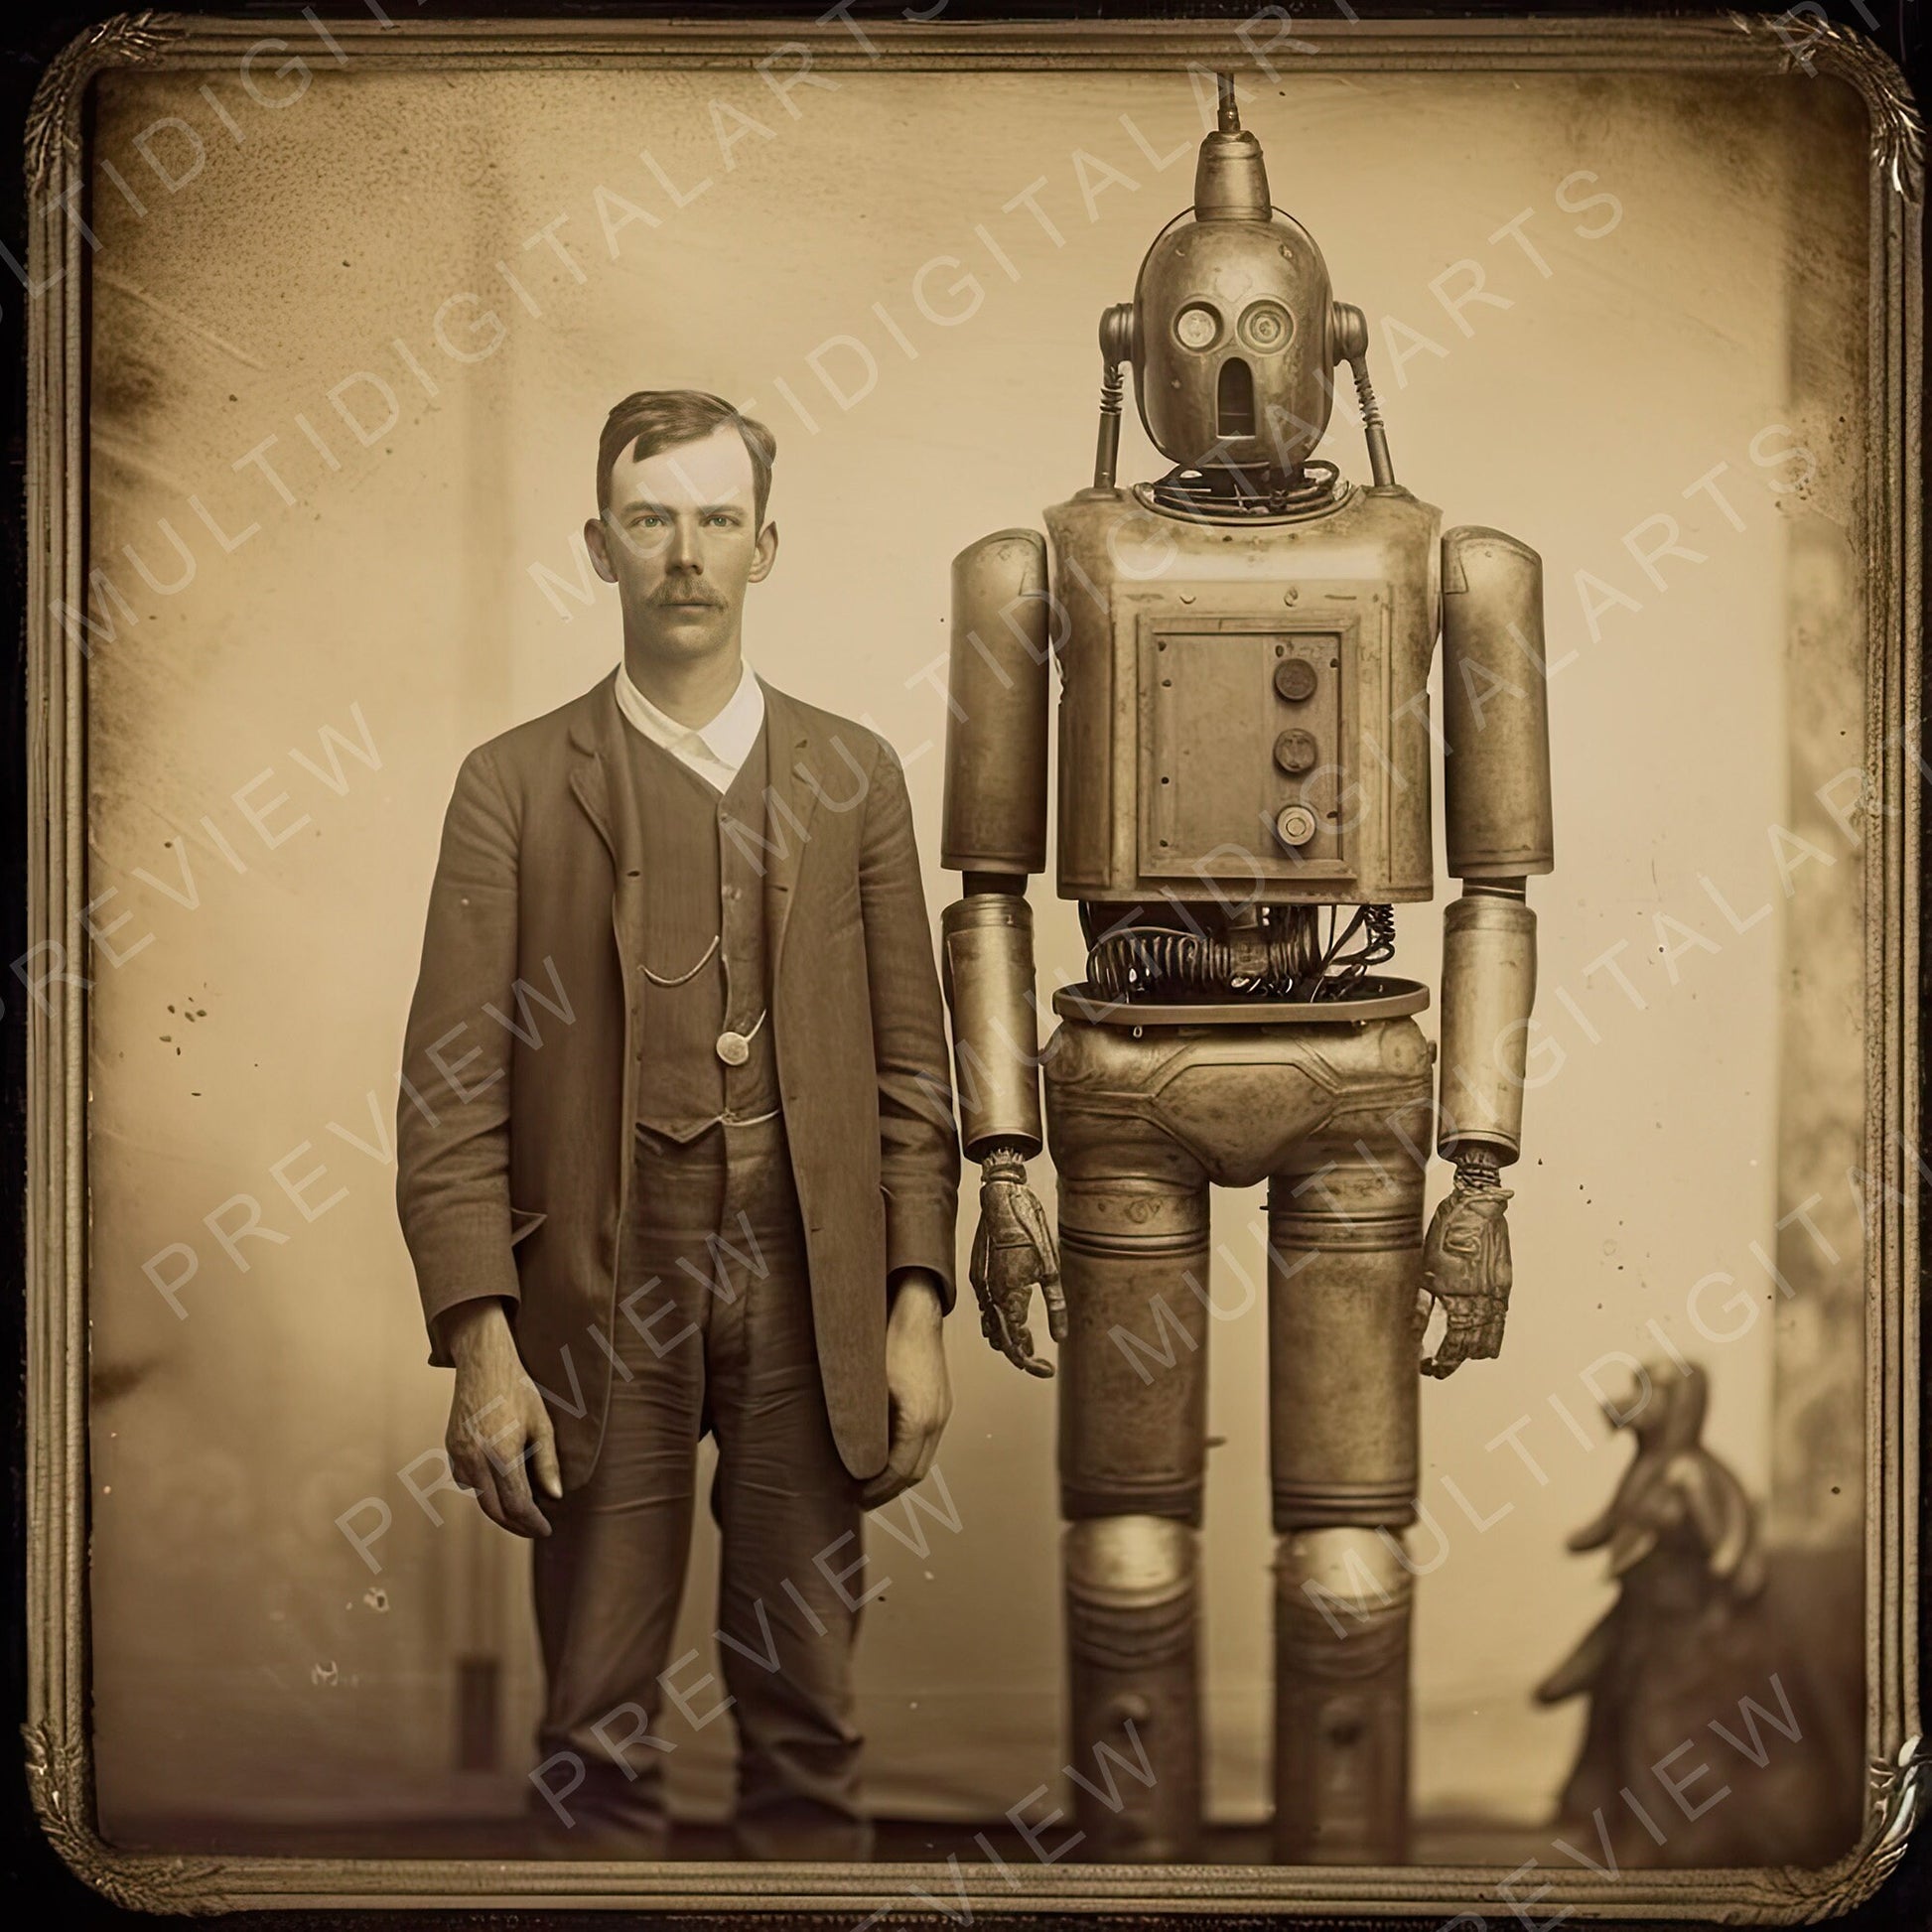 Digital Illustration - Tintype Style Photograph Man + Robot 05  6144 x 6144 300DPI